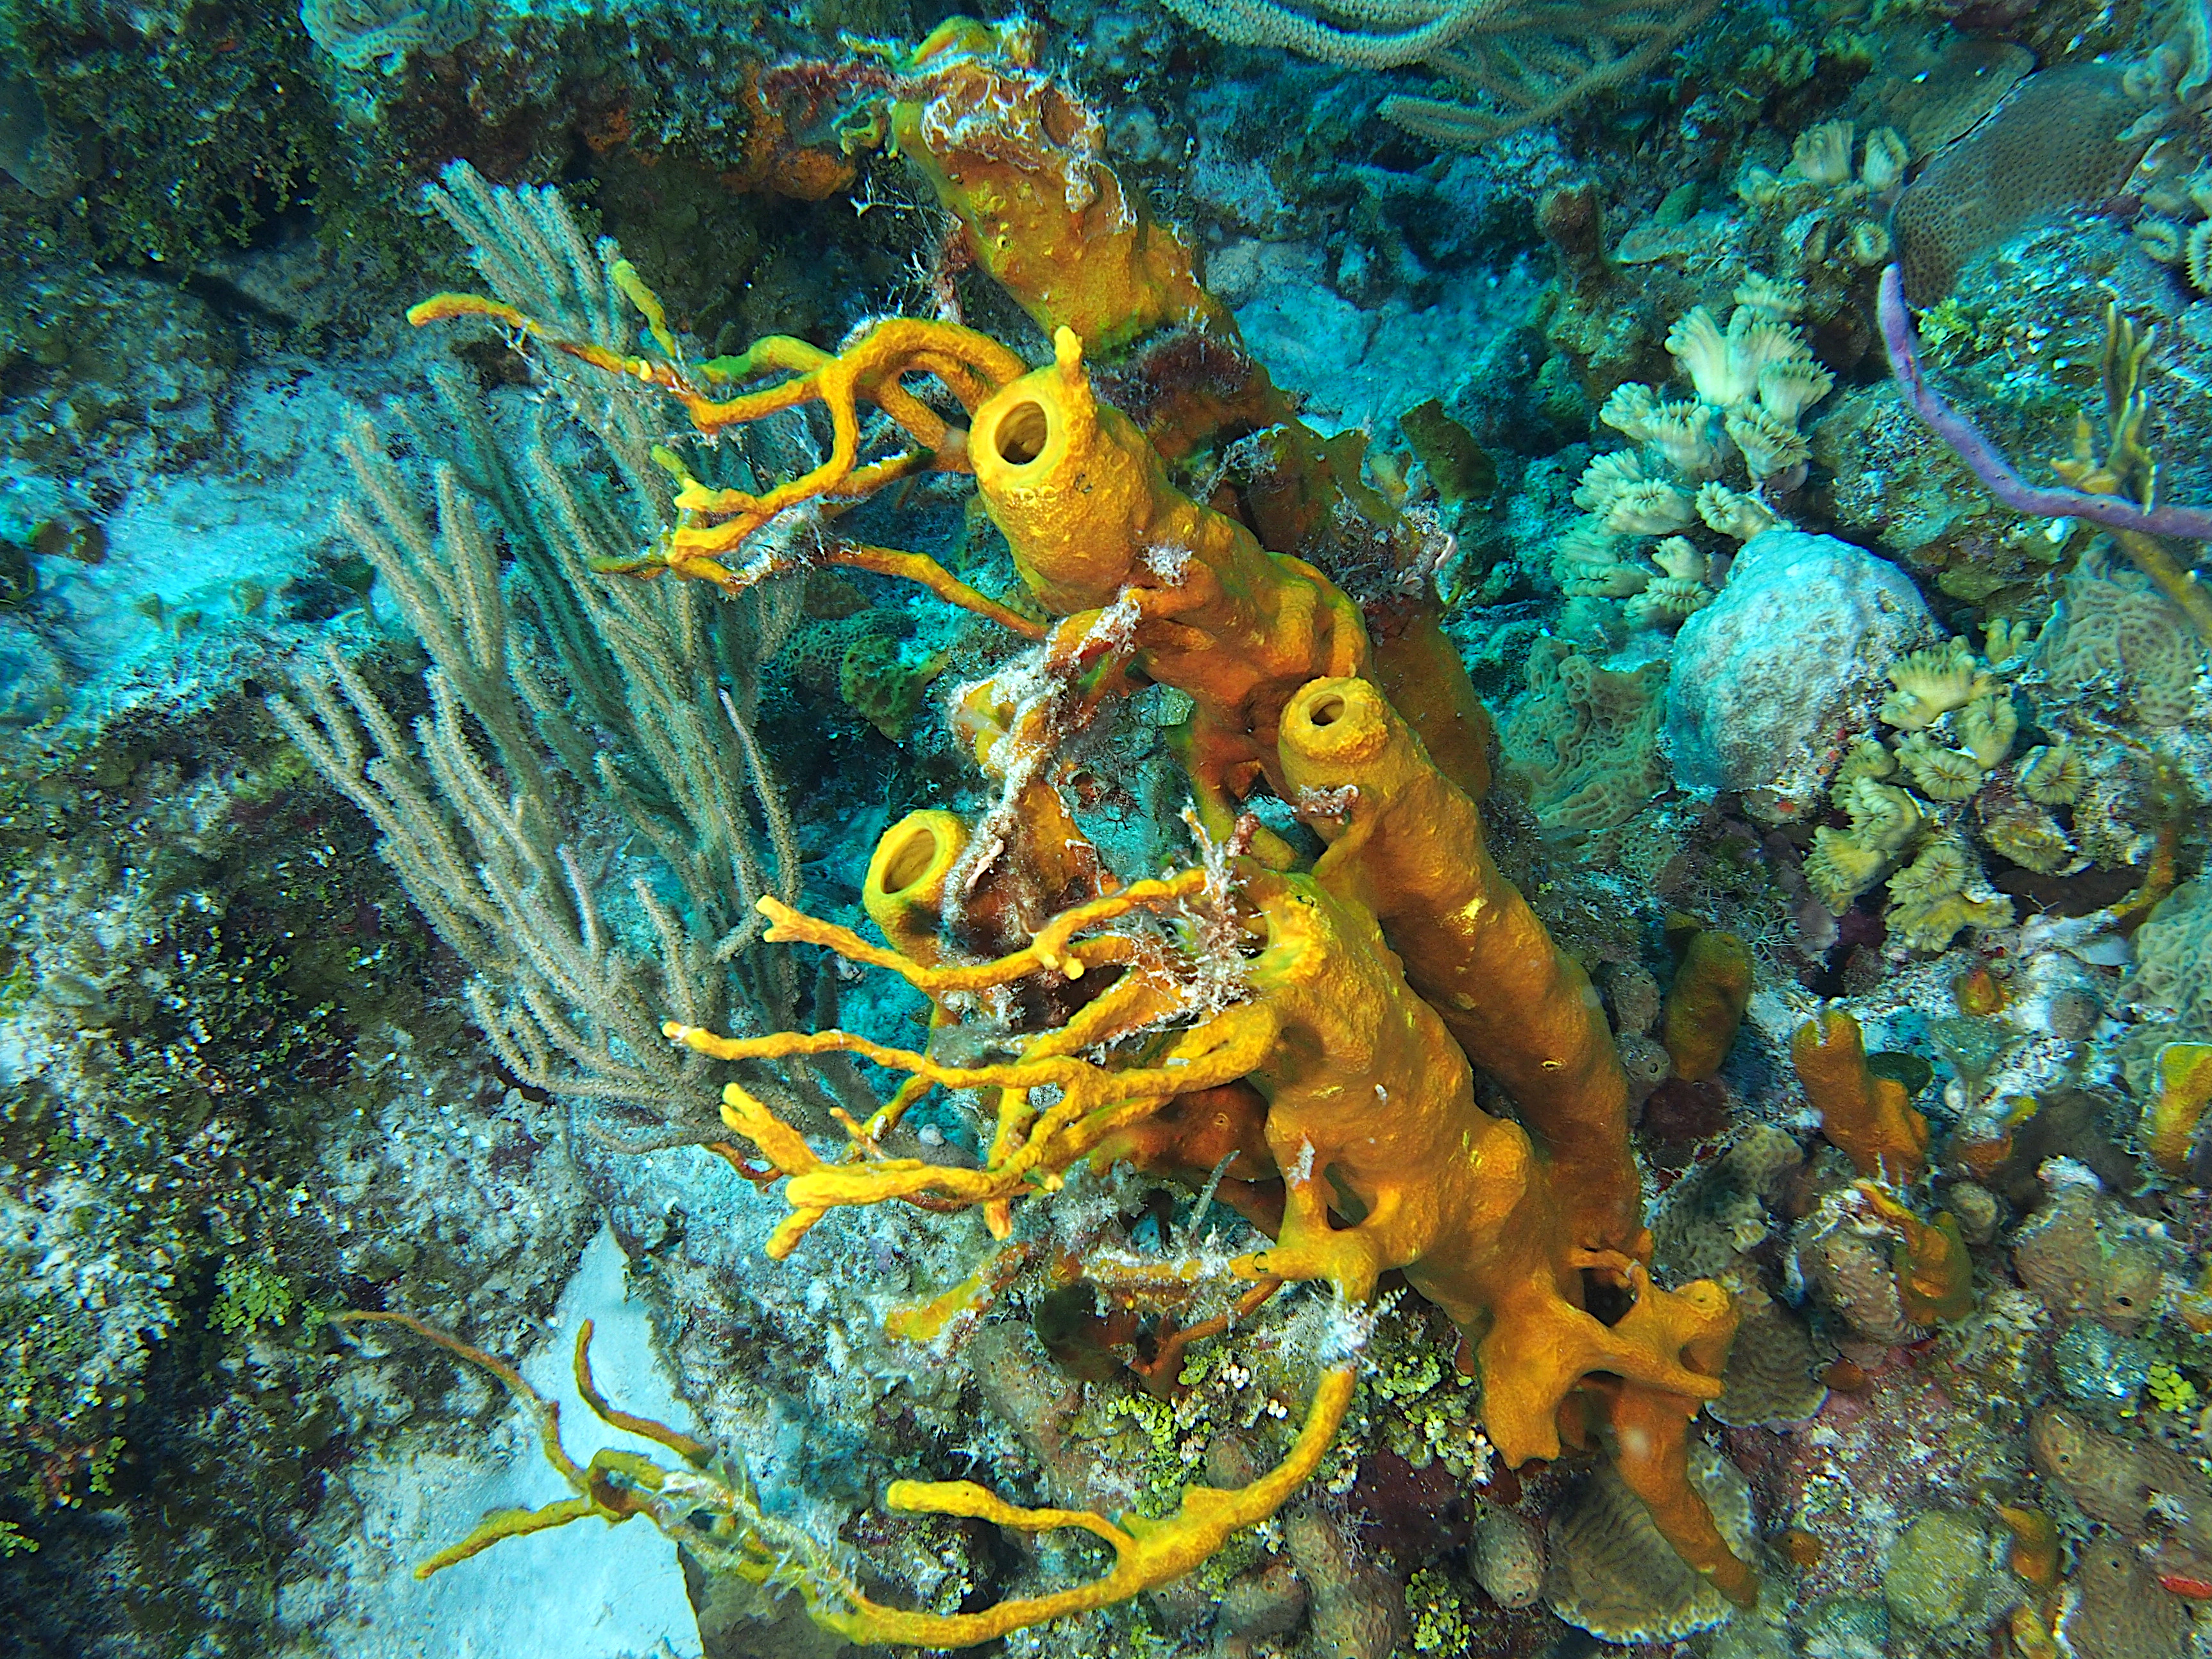 Branchlet Sponge - Aplysina insularis